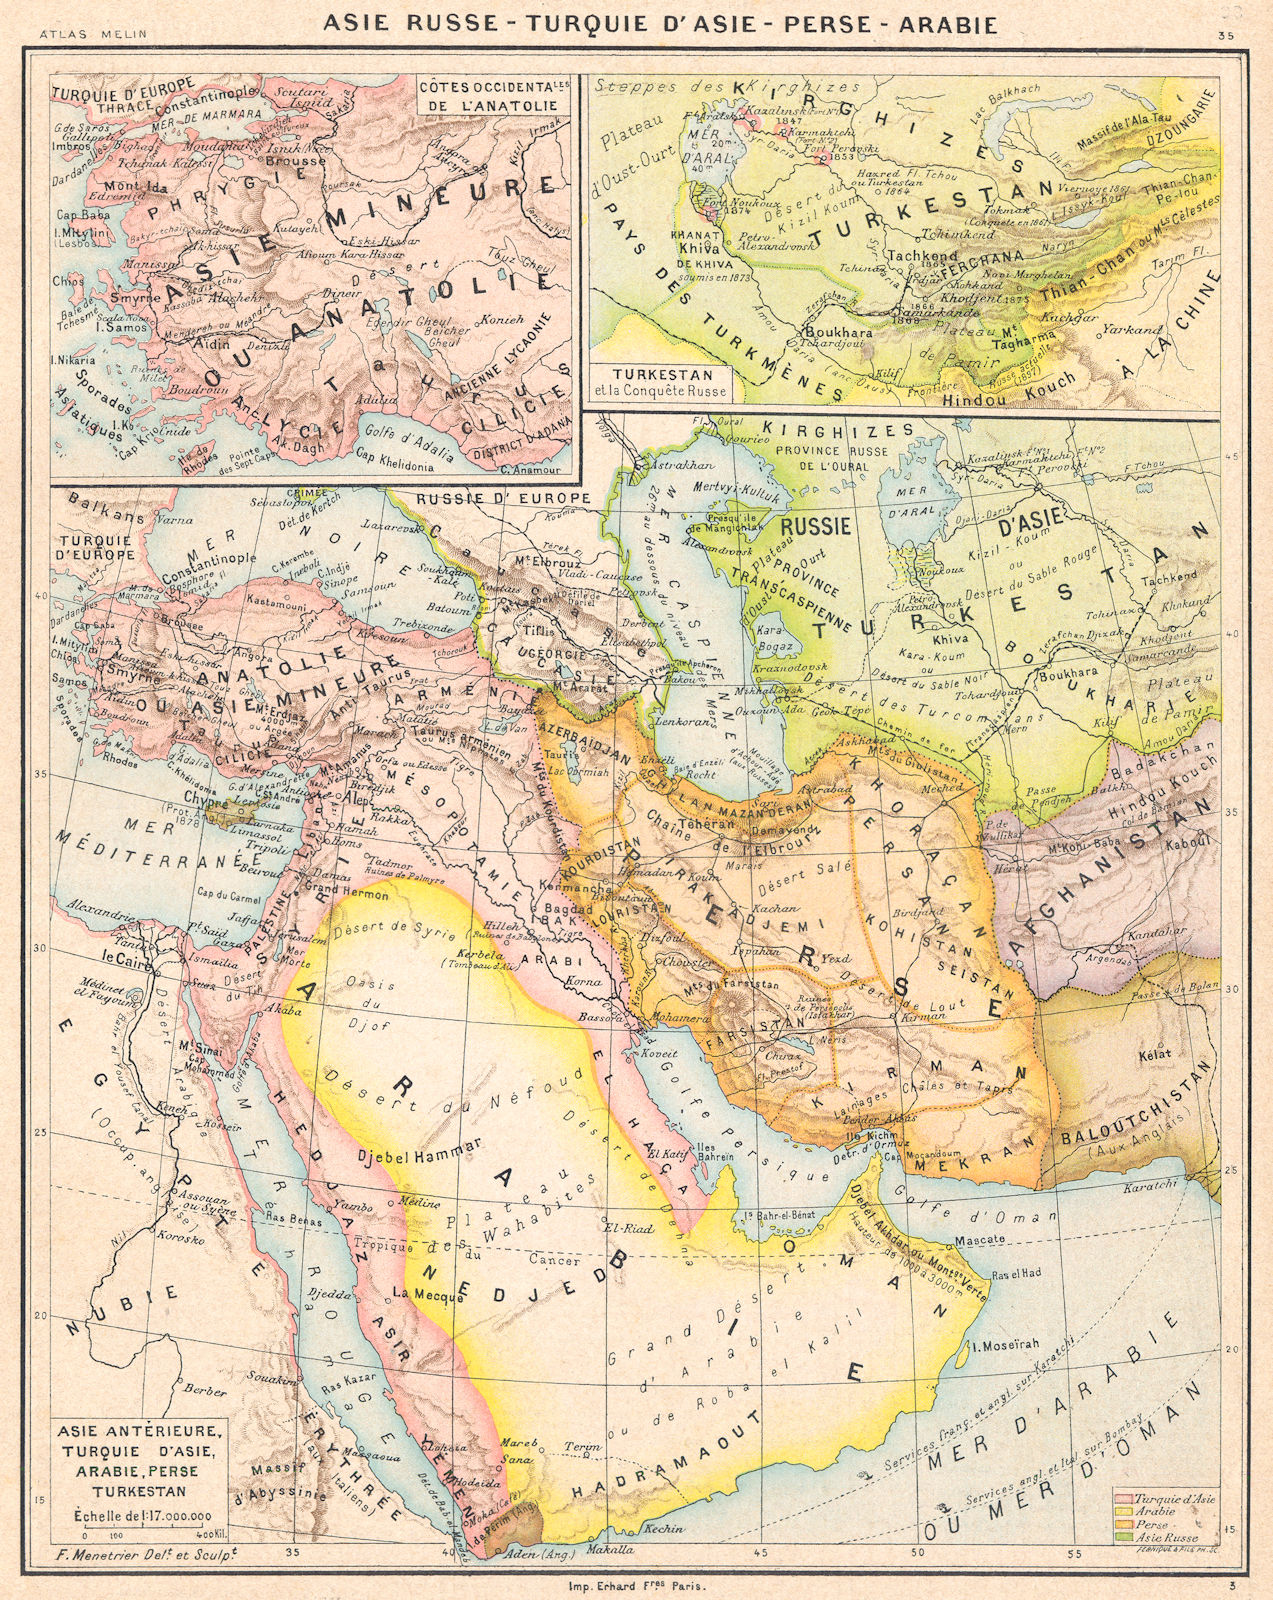 ASIA.Asie Antèrieure,Turquie,Arabie,Perse(Persia)Turkestan;Anatolie 1900 map